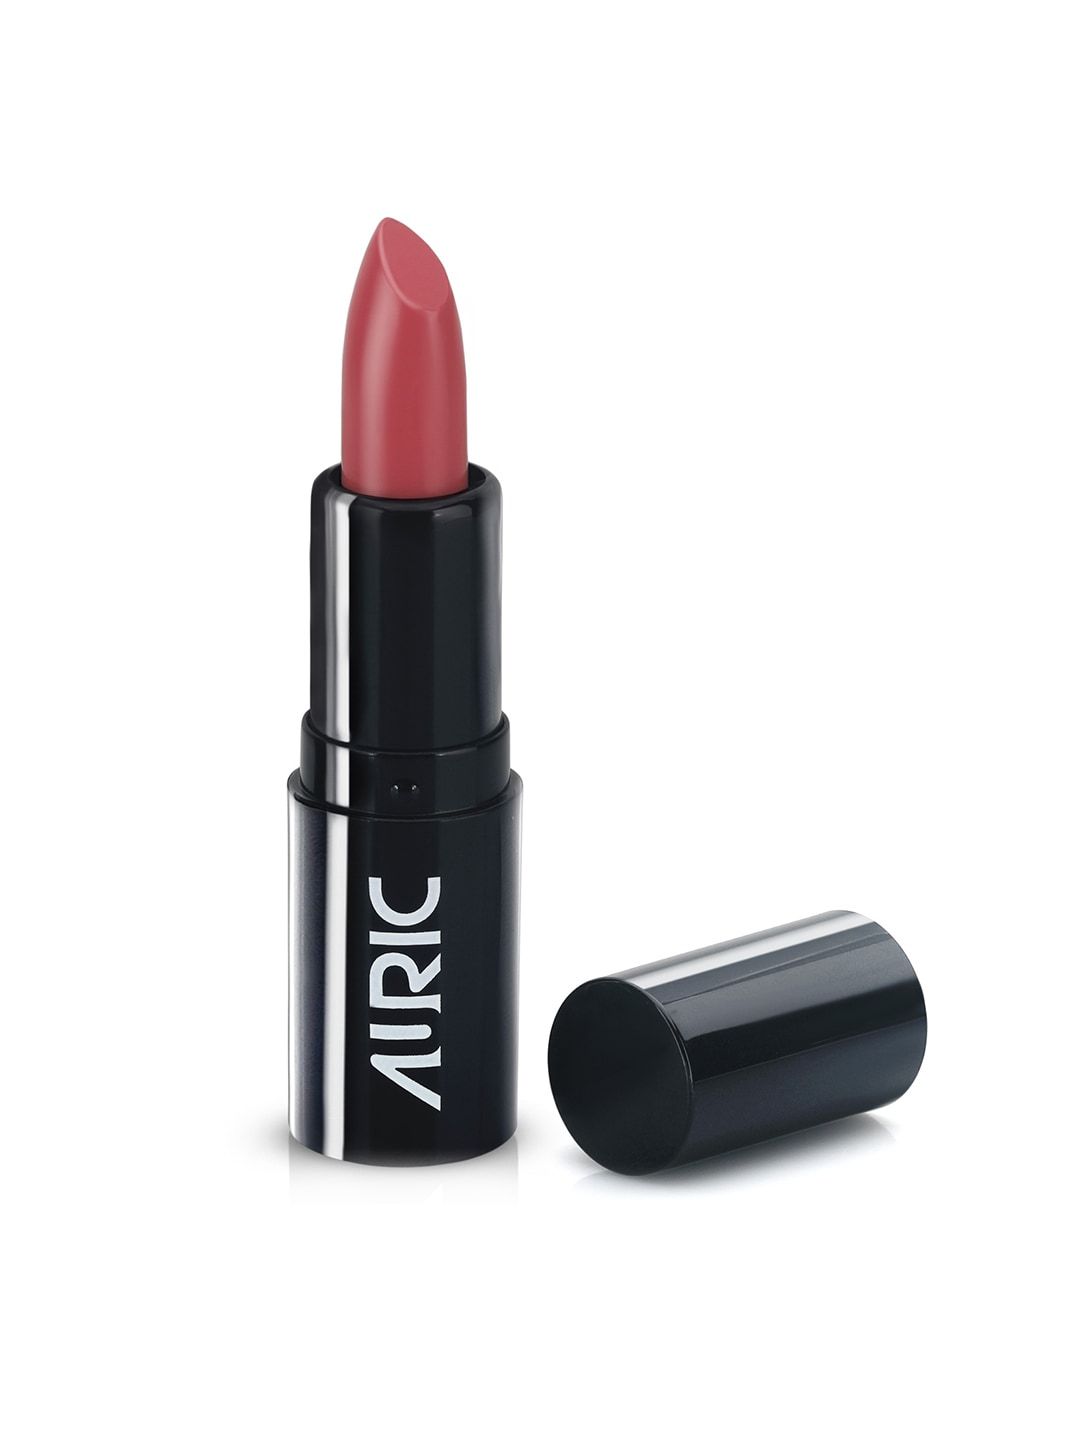 Auric MoistureLock Lipstick - Rose Candy Price in India